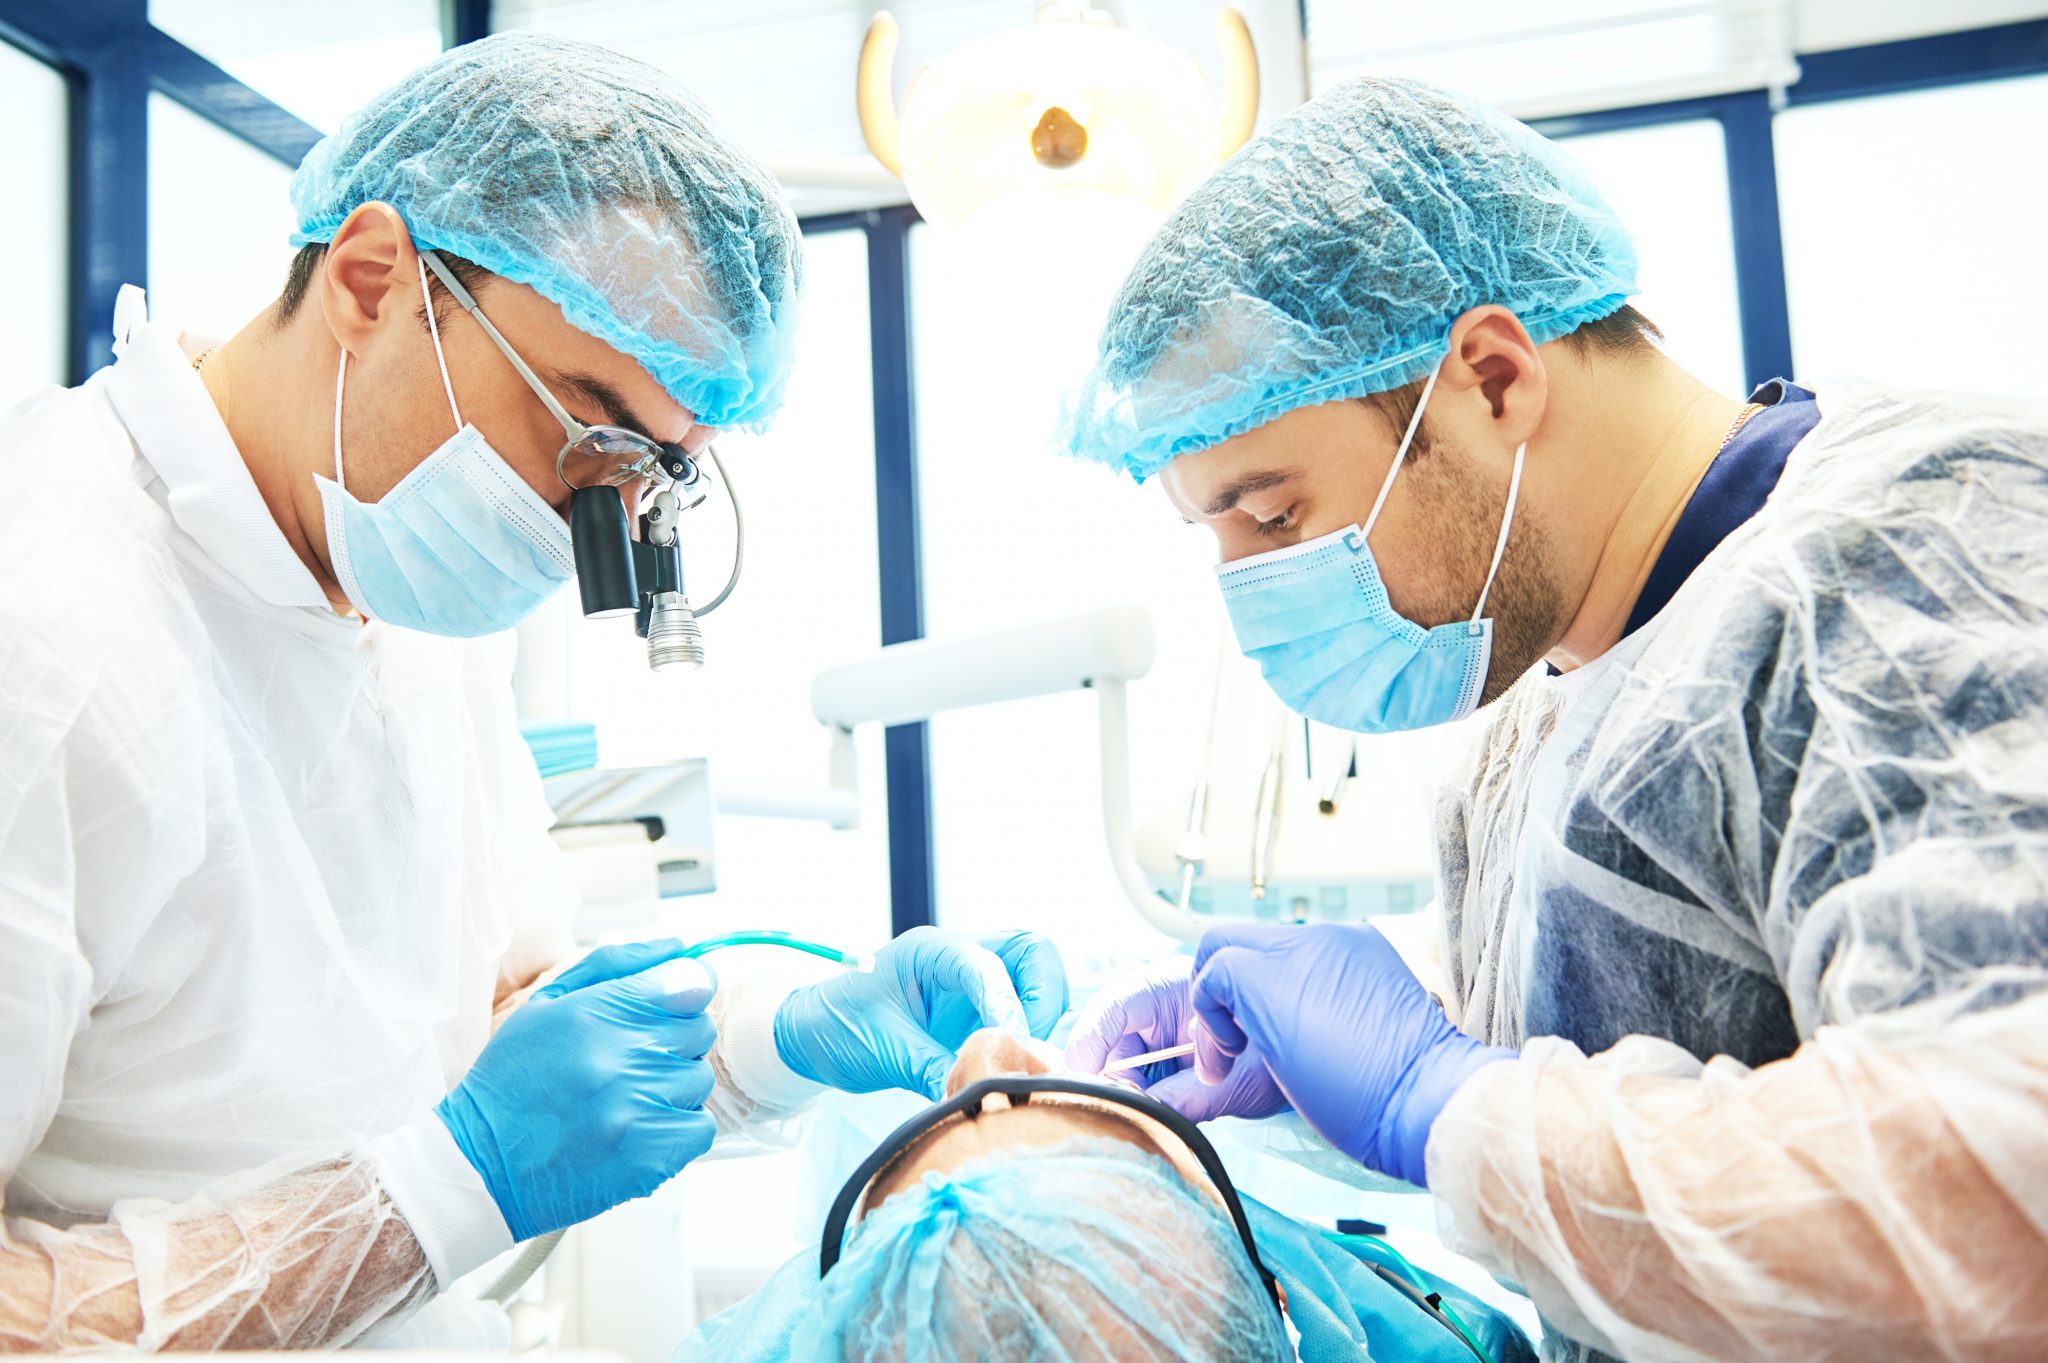 Dentist In Uniform Perform Operation At Dentistry Office